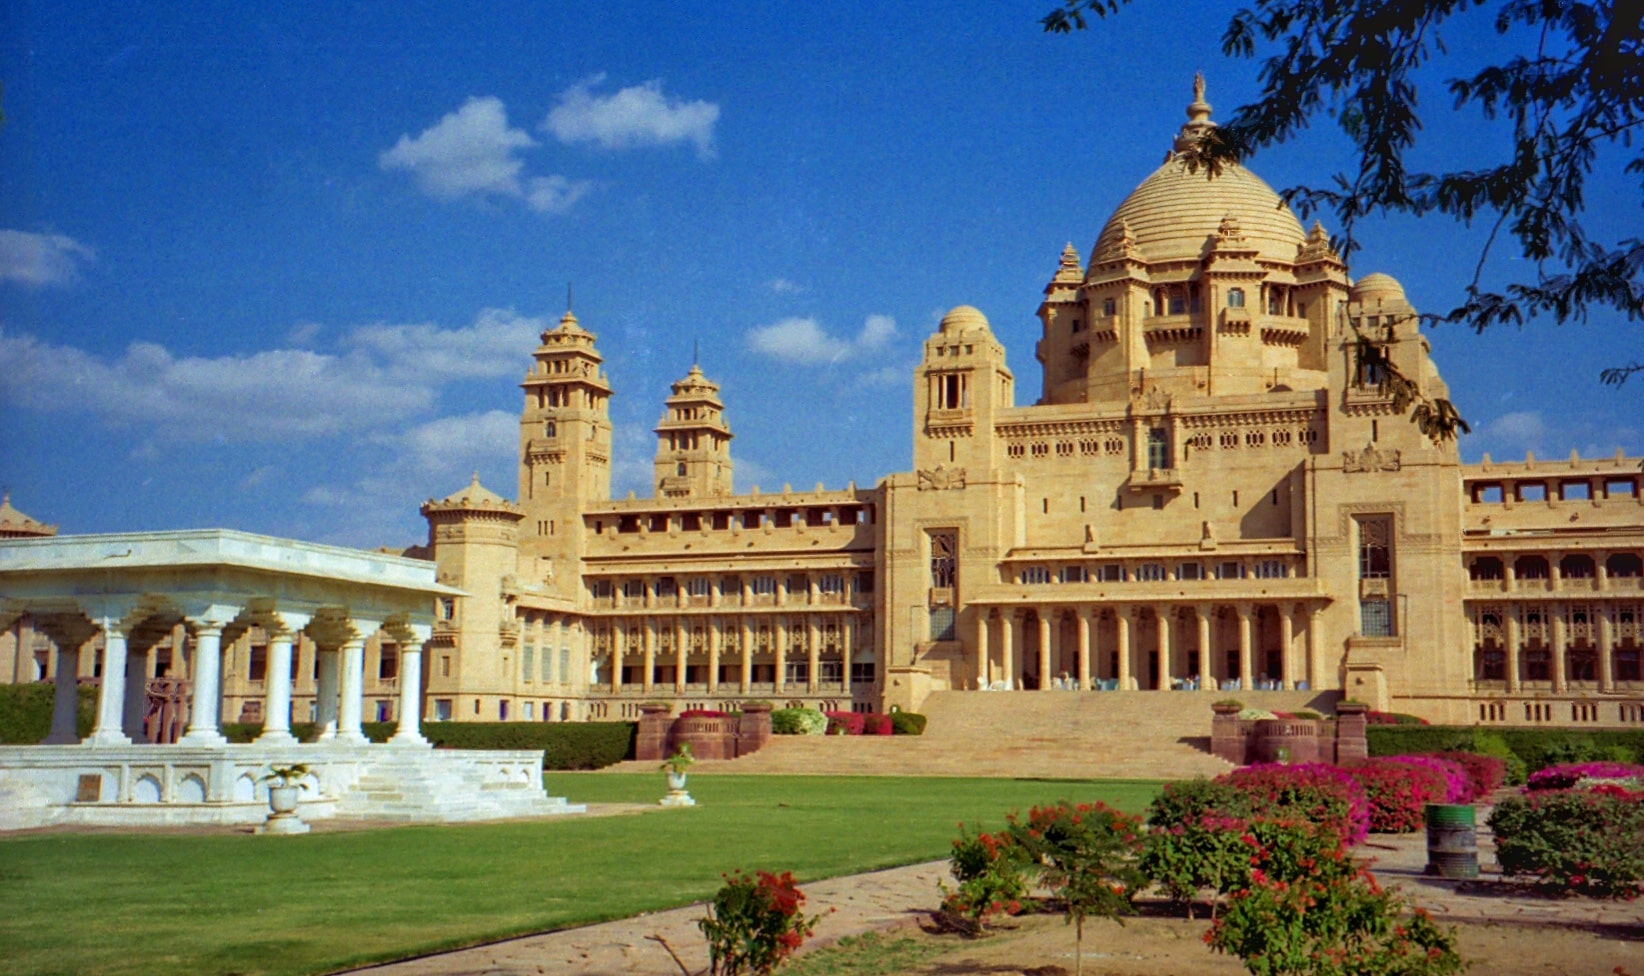 umaid-bhawan-palace